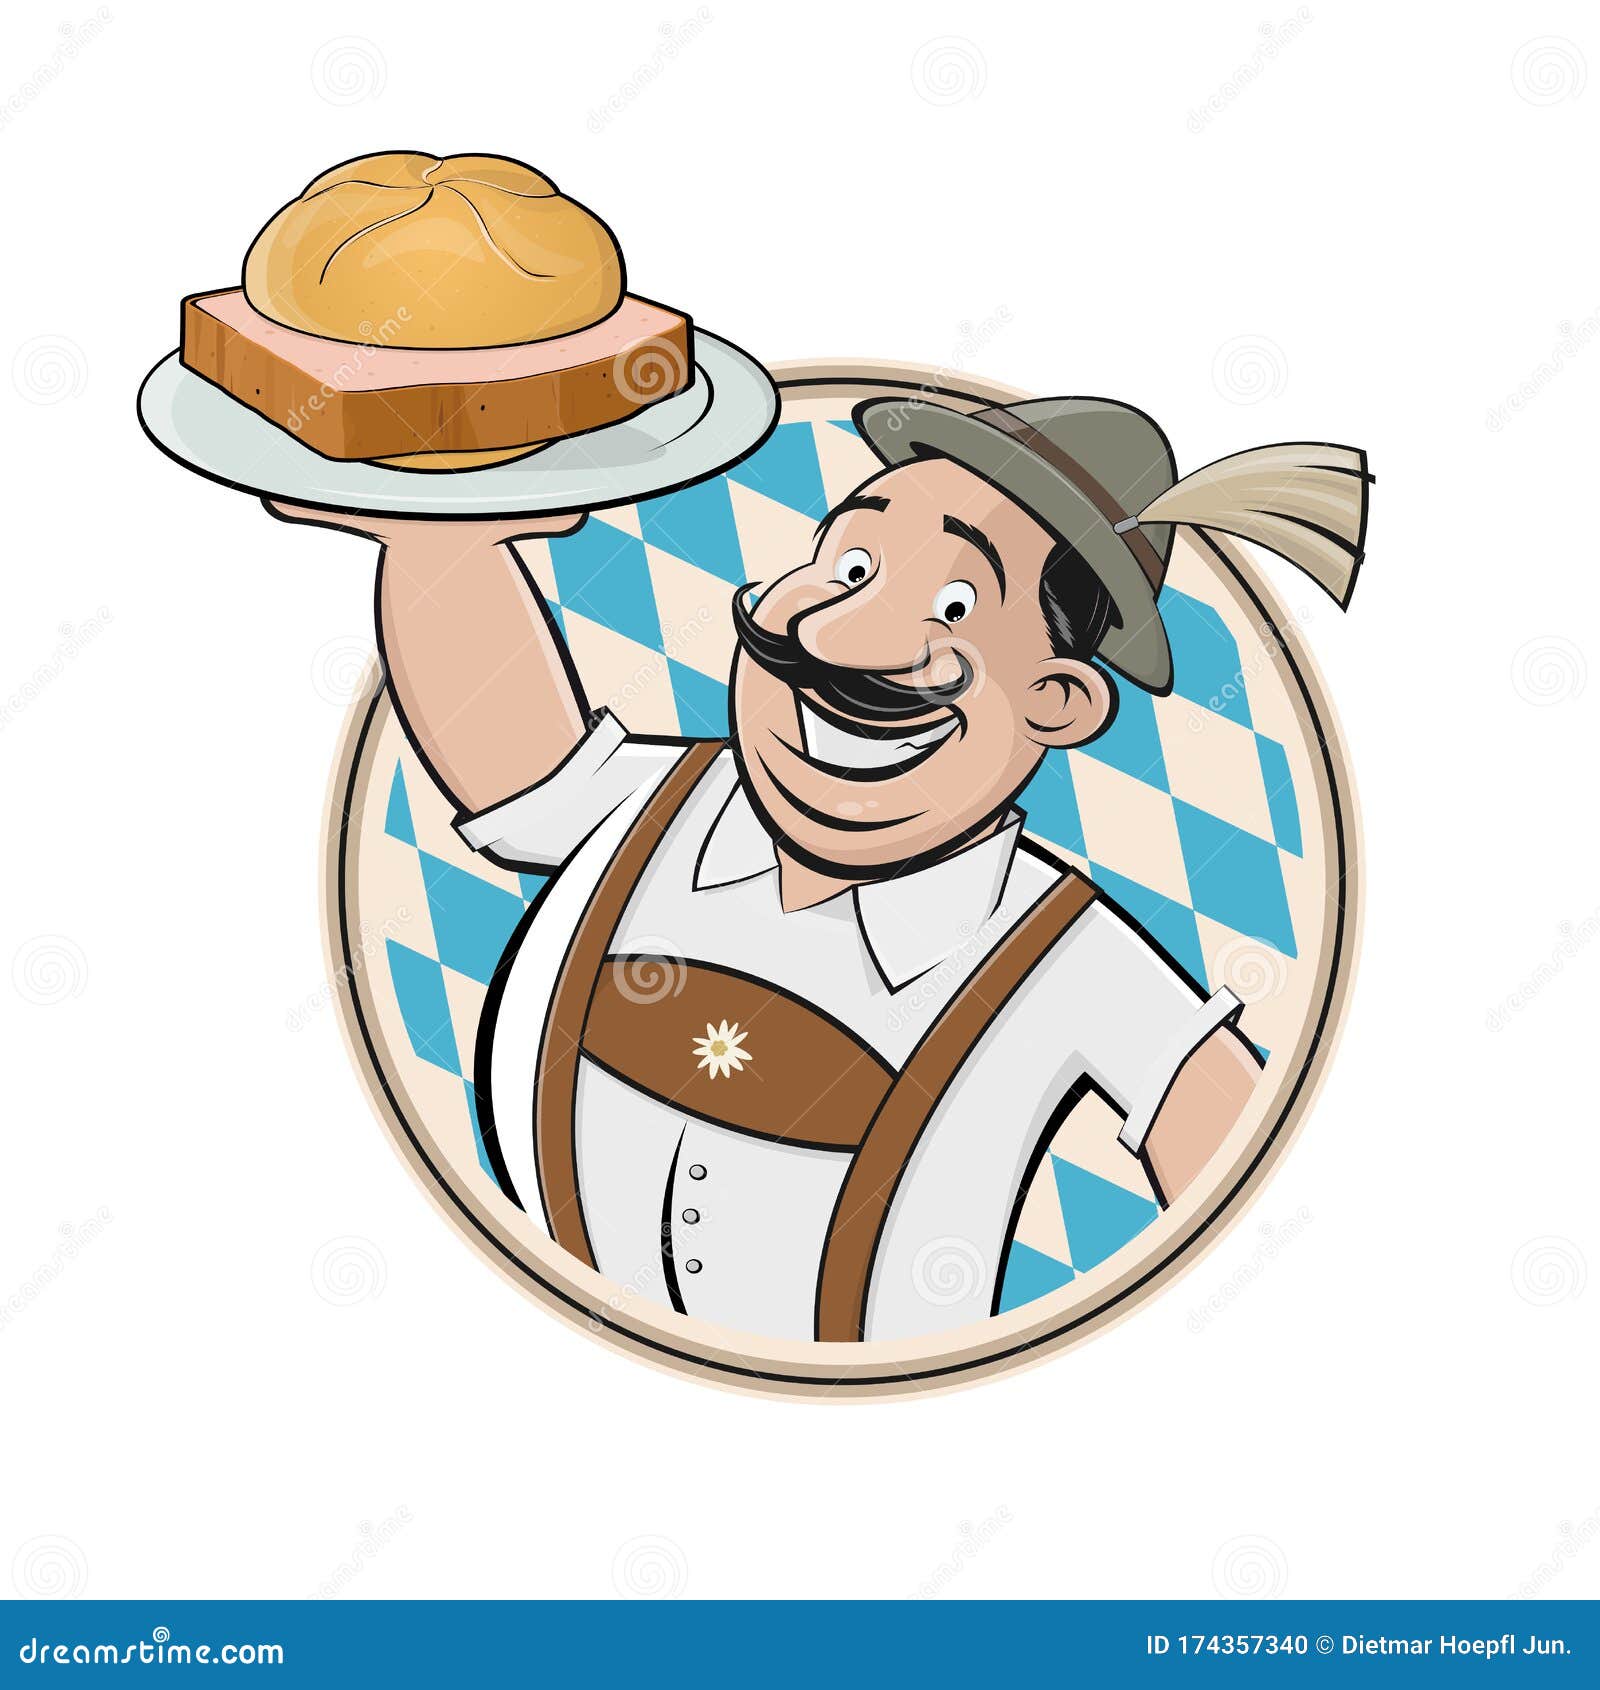 cartoon logo of a bavarian man serving german specialty food meatloaf called leberkÃÂ¤se